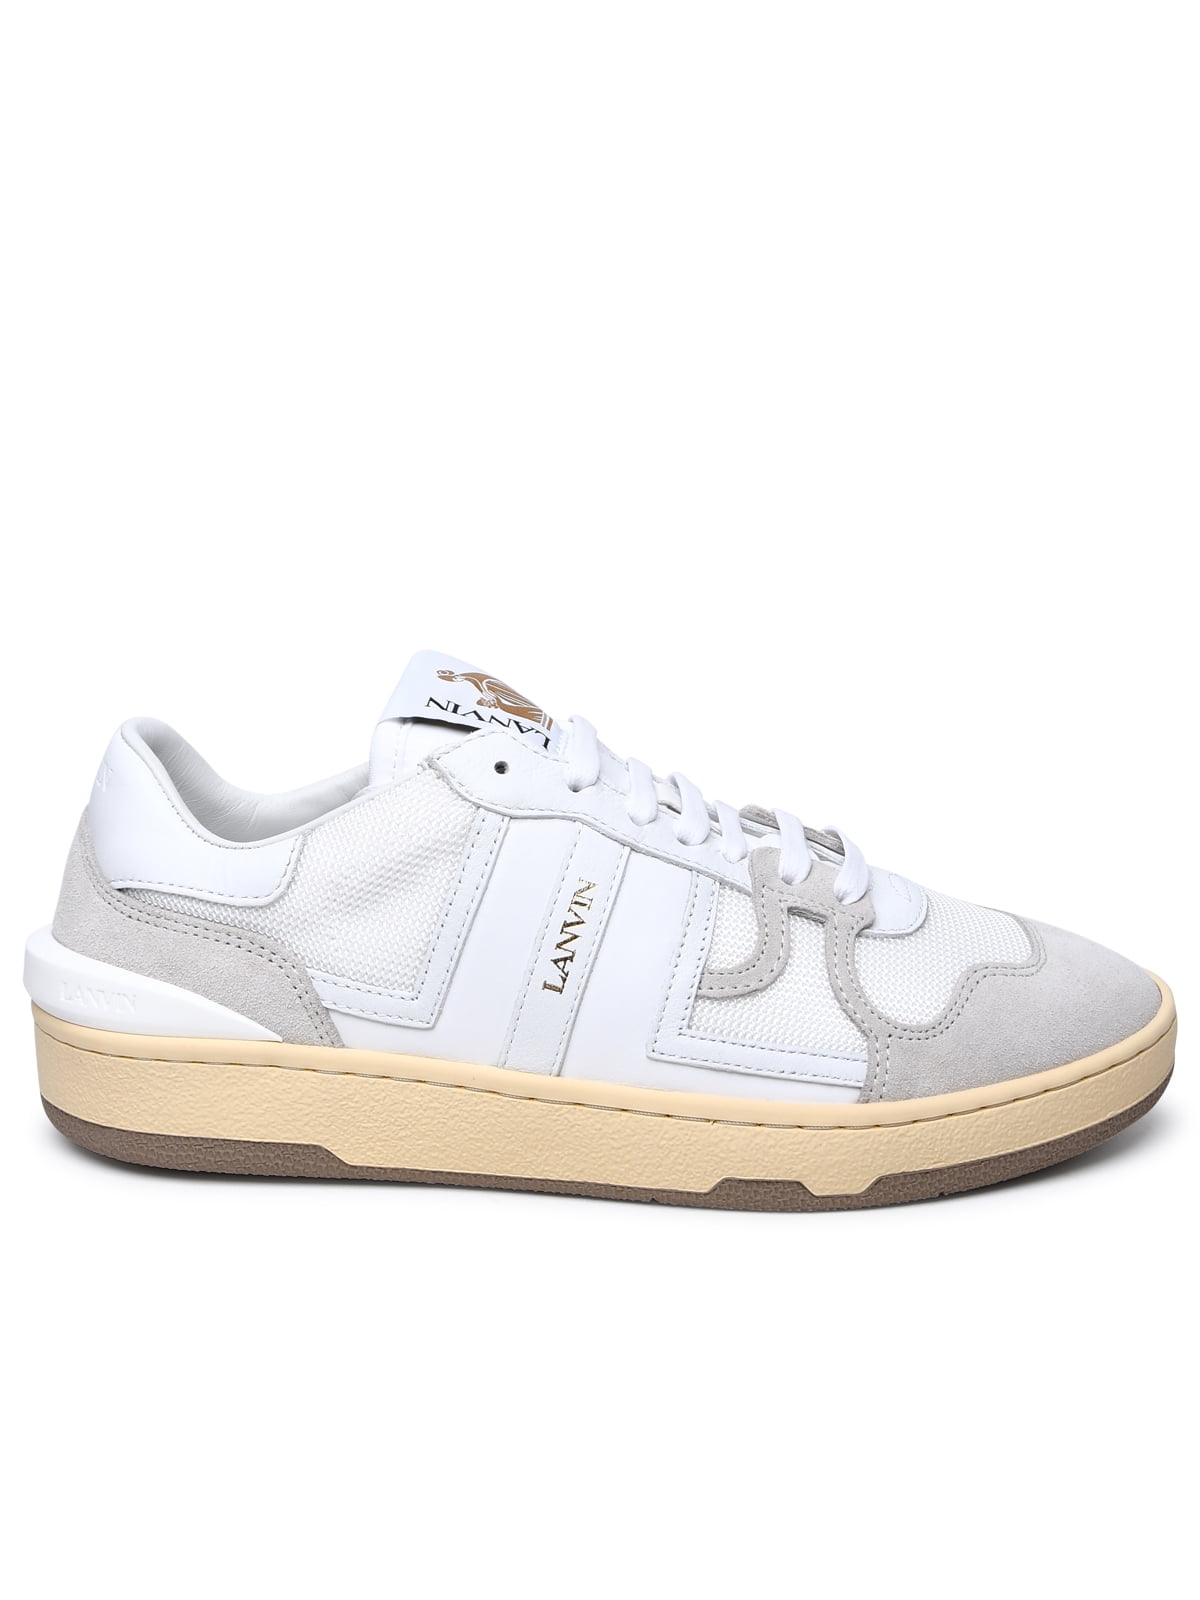 Lanvin Uomo White Leather Blend Sneakers - Walmart.com